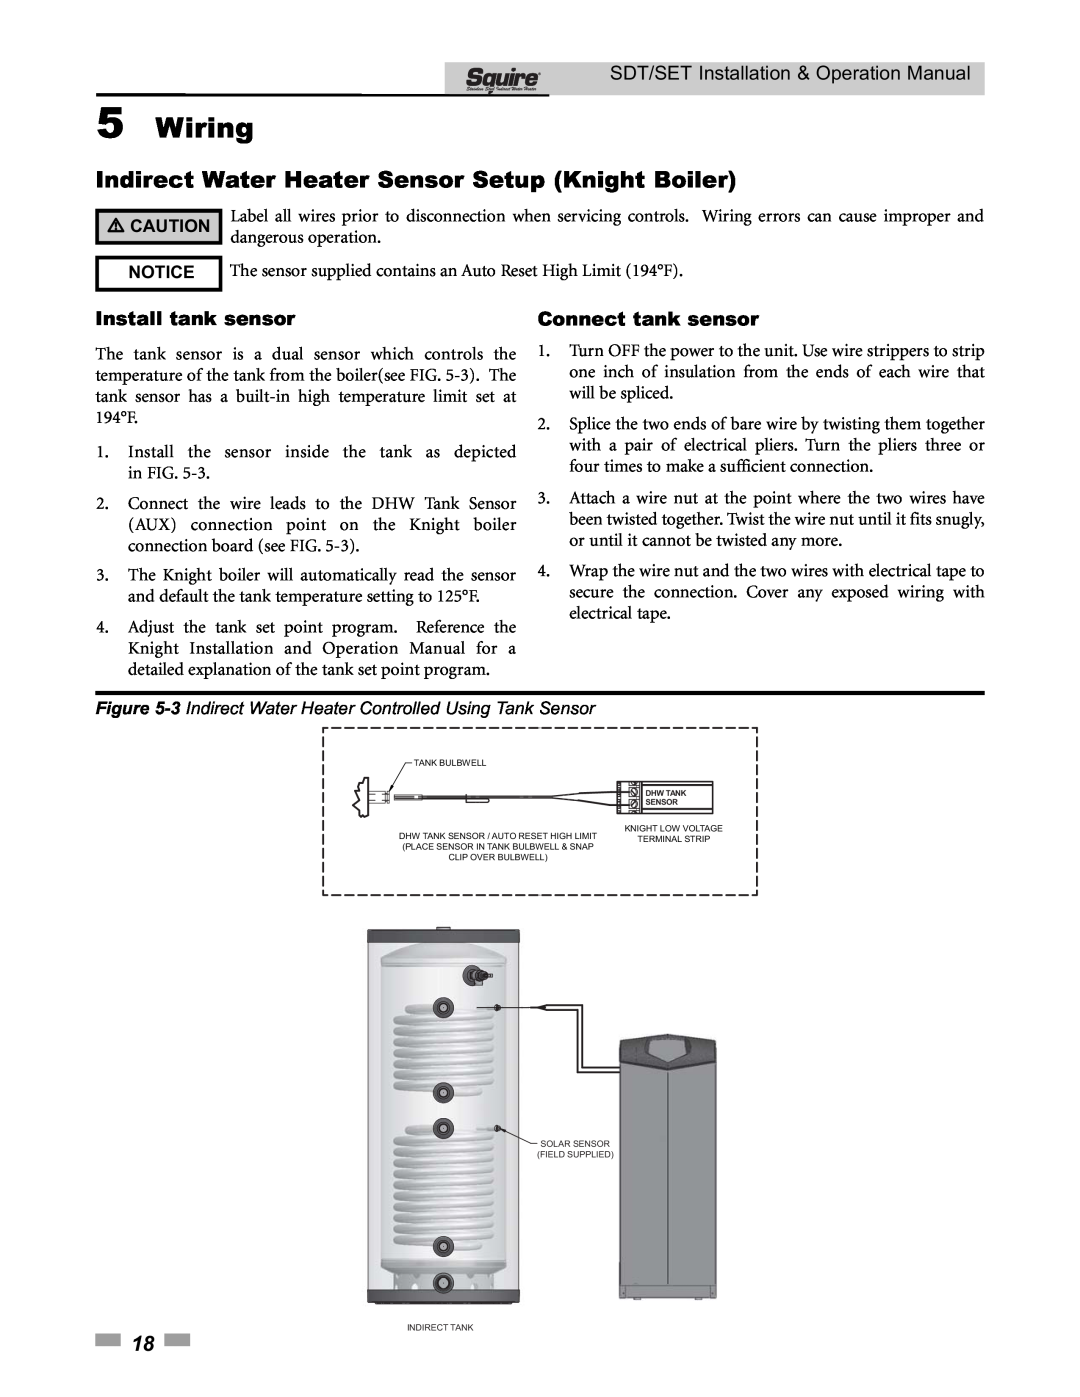 Lochinvar SDT/SET065 - 119 Indirect Water Heater Sensor Setup Knight Boiler, Install tank sensor, Connect tank sensor 